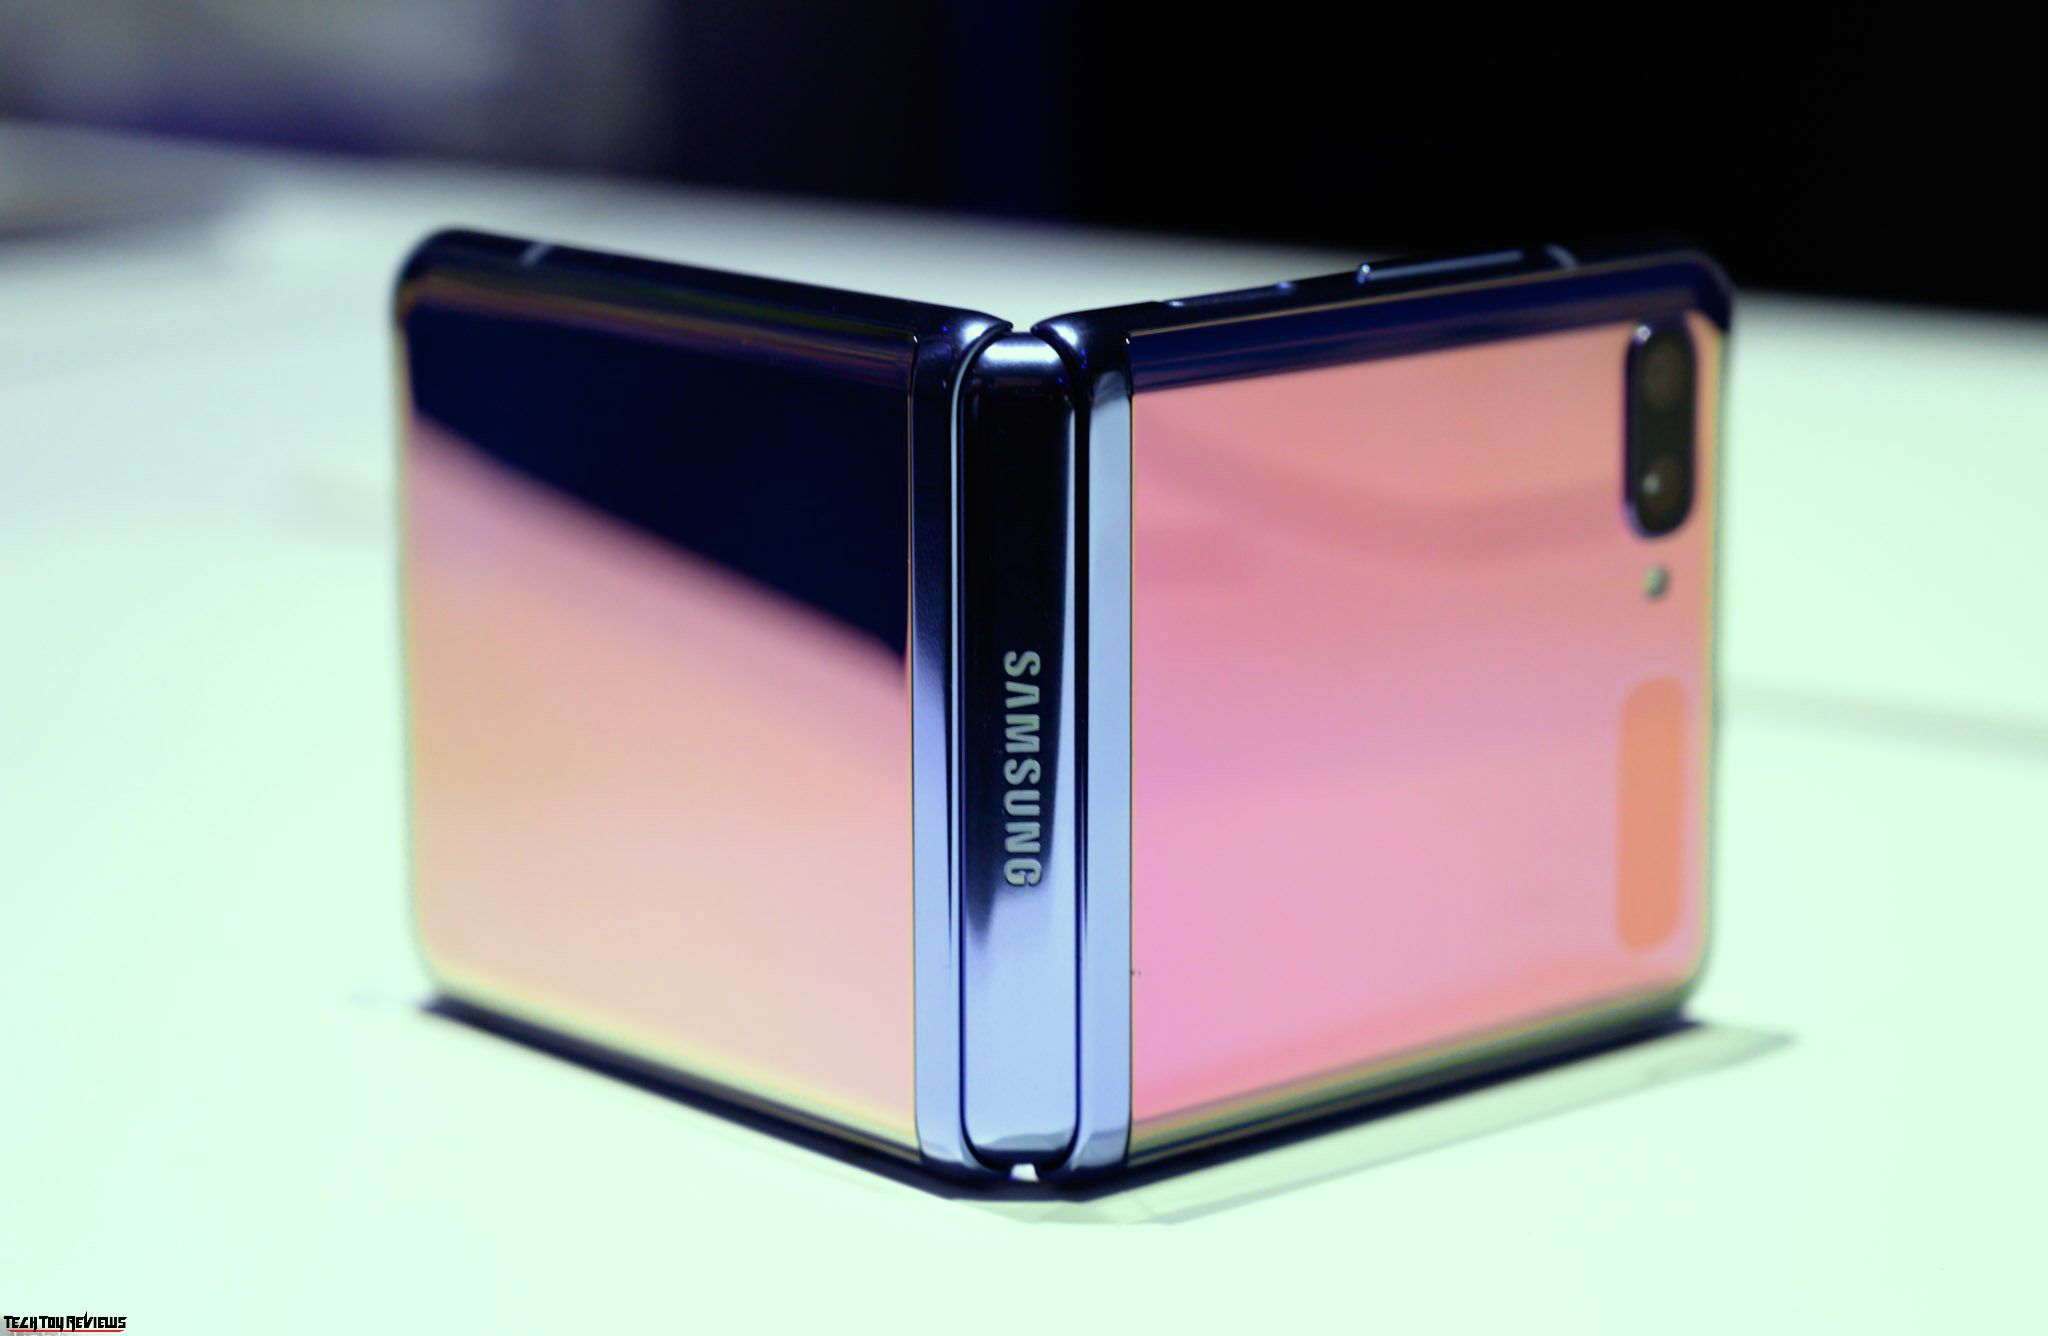 Samsung Z Flip Phone Dual-SIM Unlocked model now available via BH Photo ...